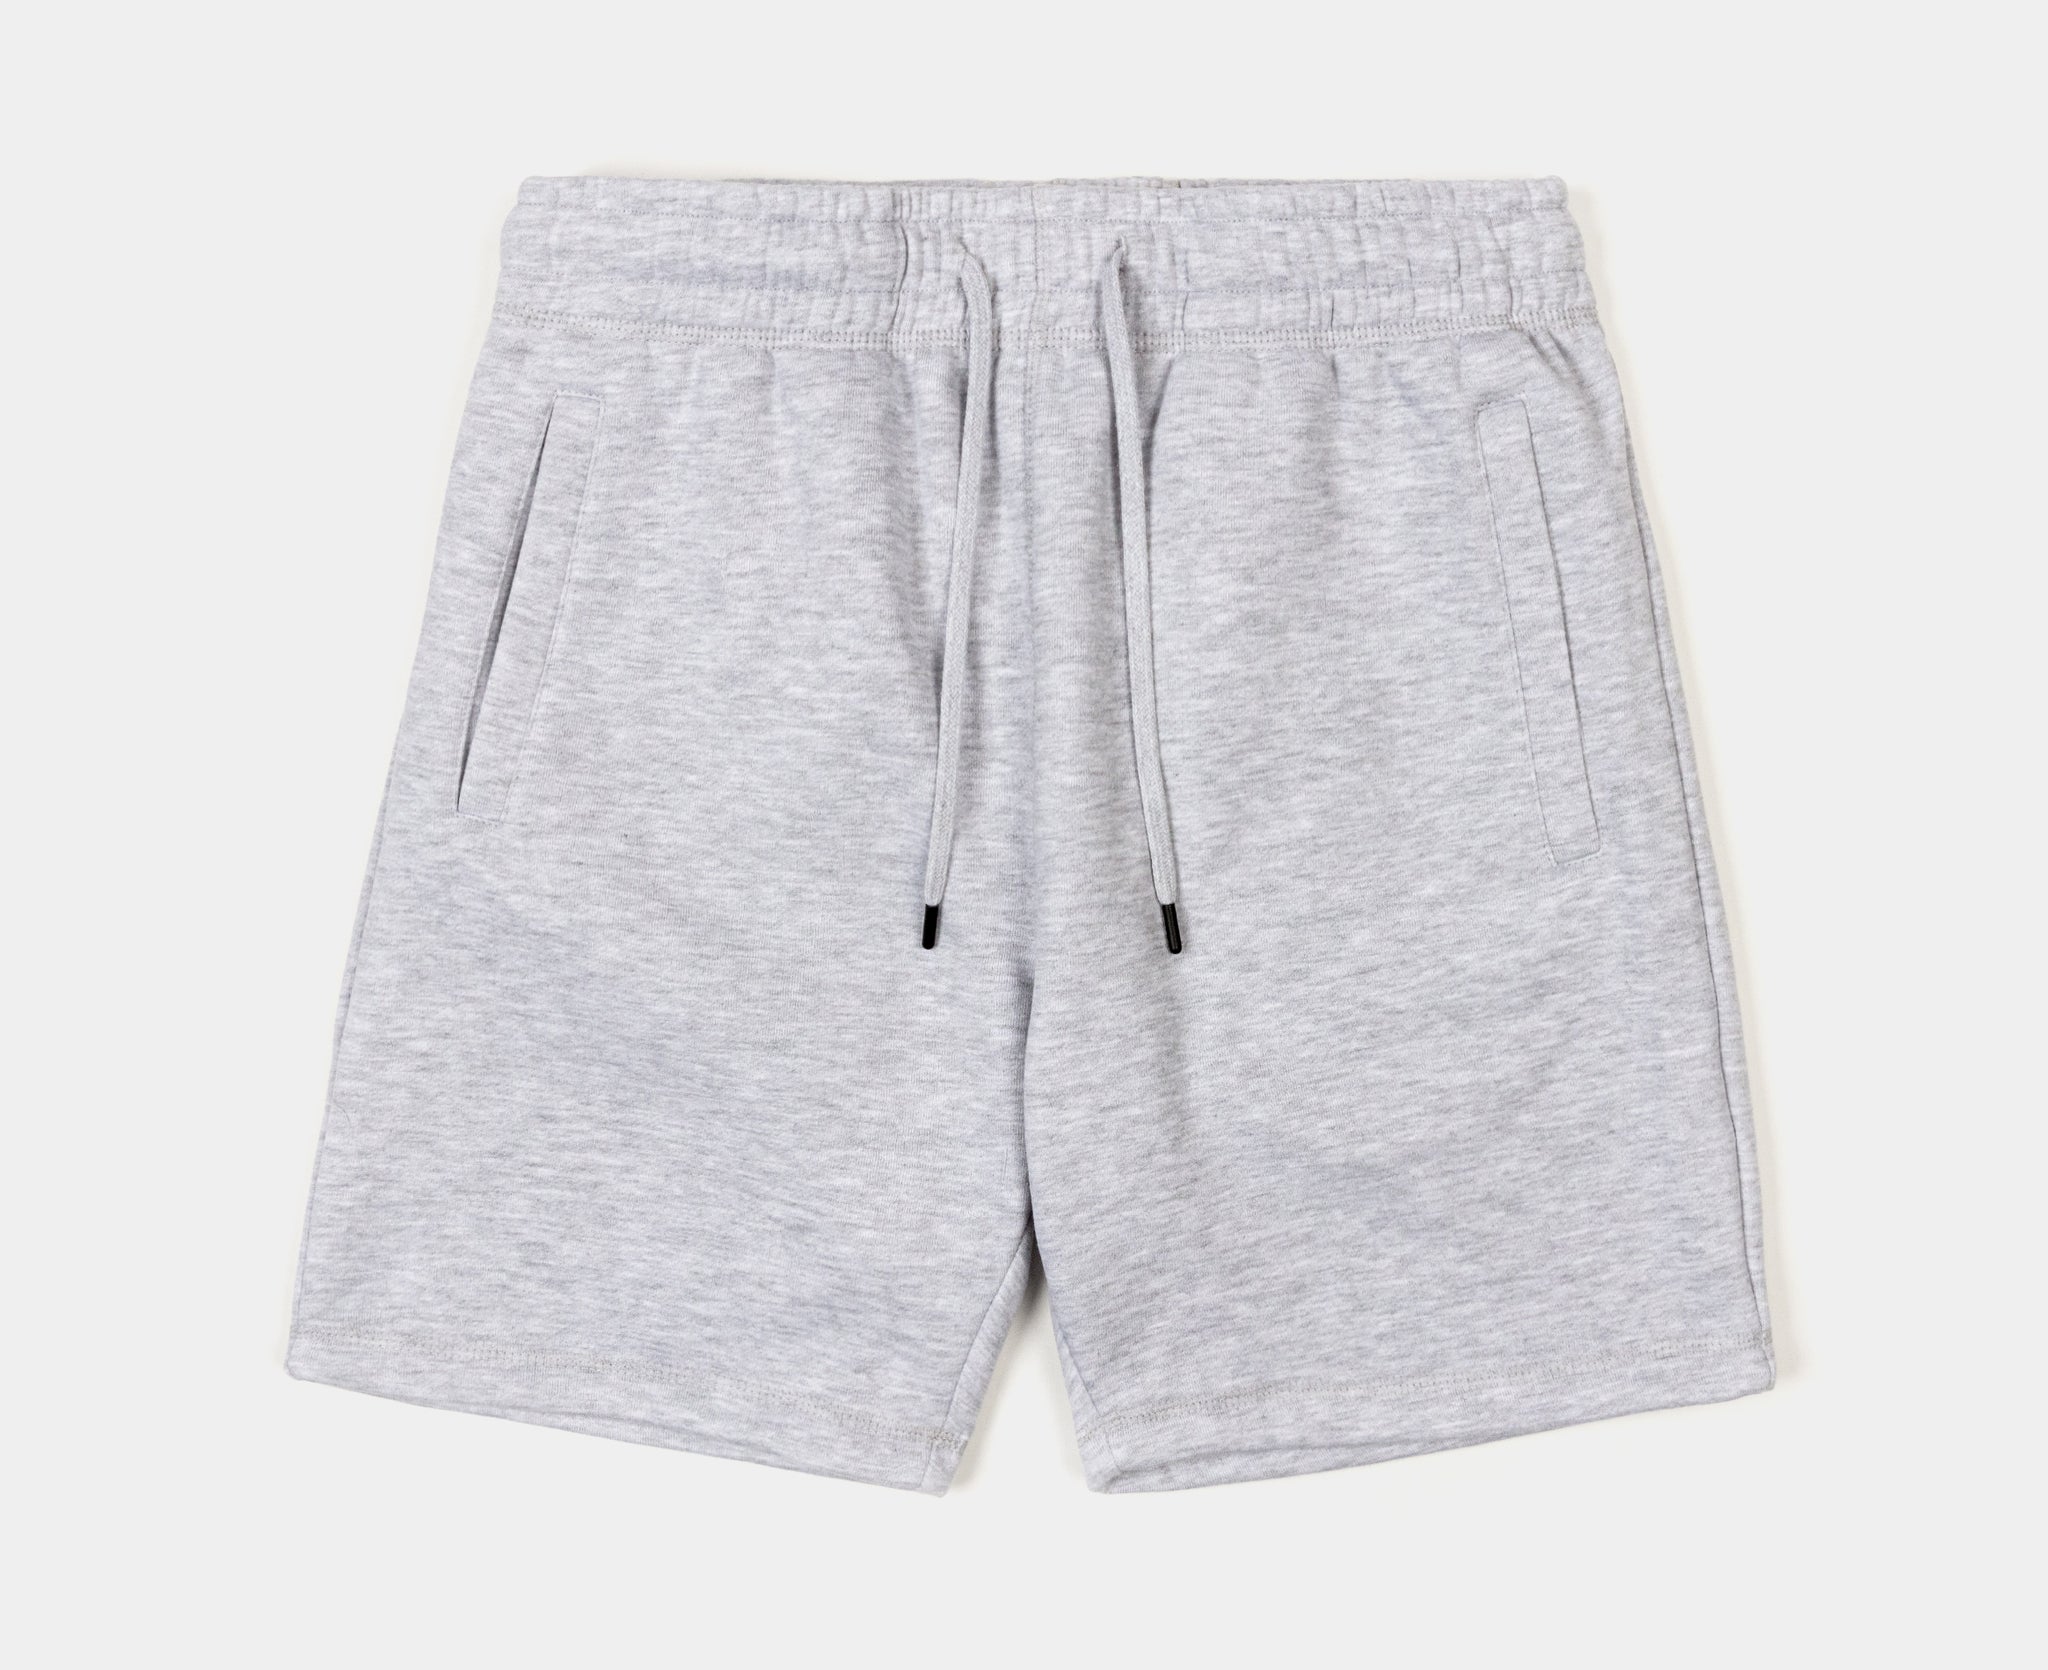 Fashion House Men's Casual Shorts - Gray